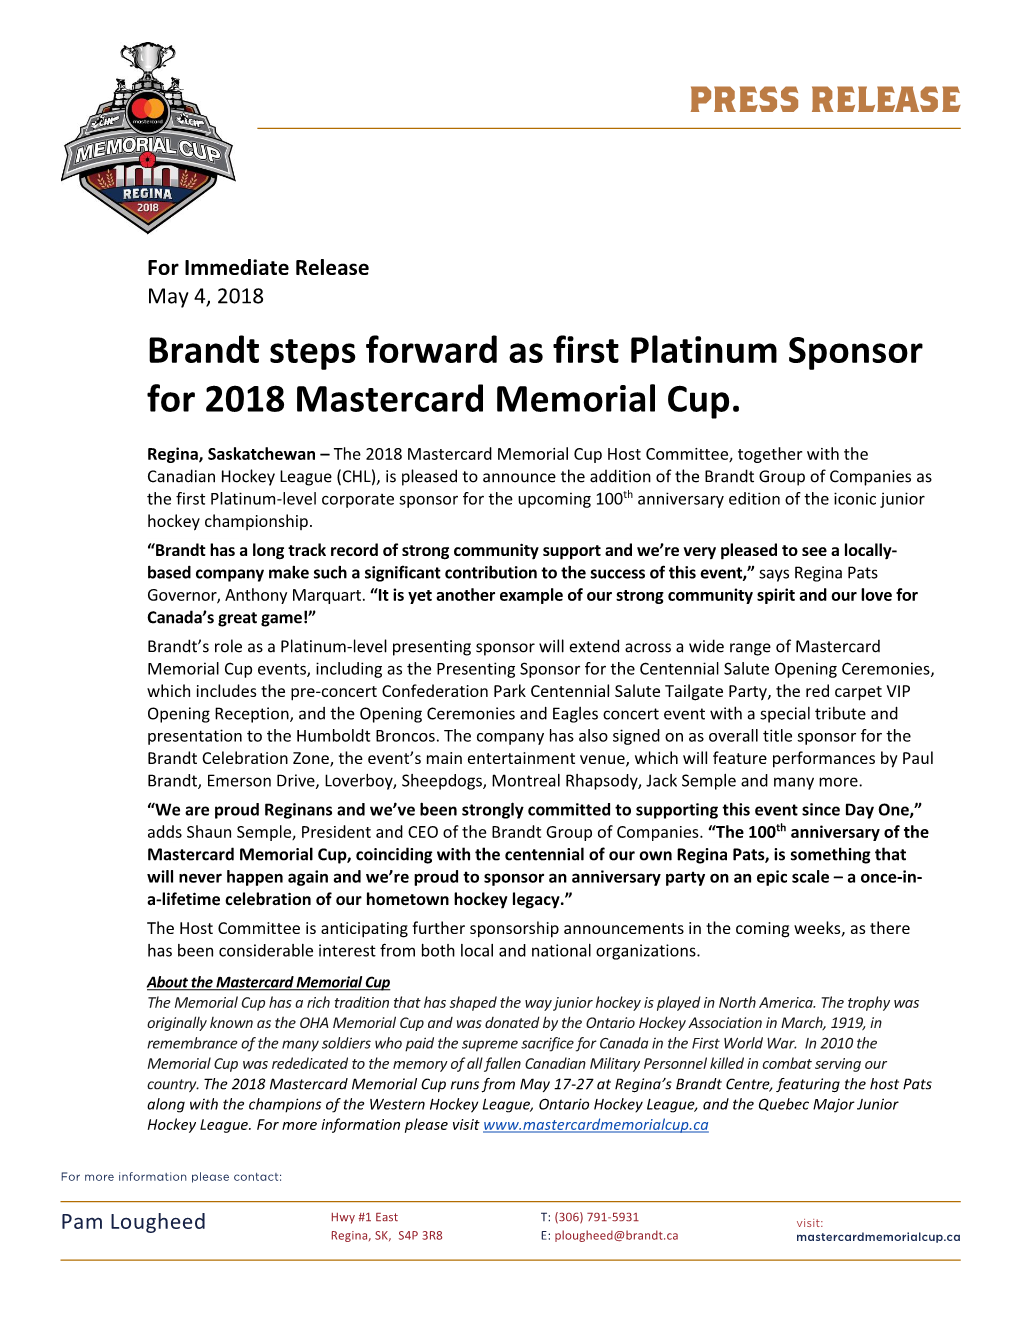 Brandt Steps Forward As First Platinum Sponsor for 2018 Mastercard Memorial Cup